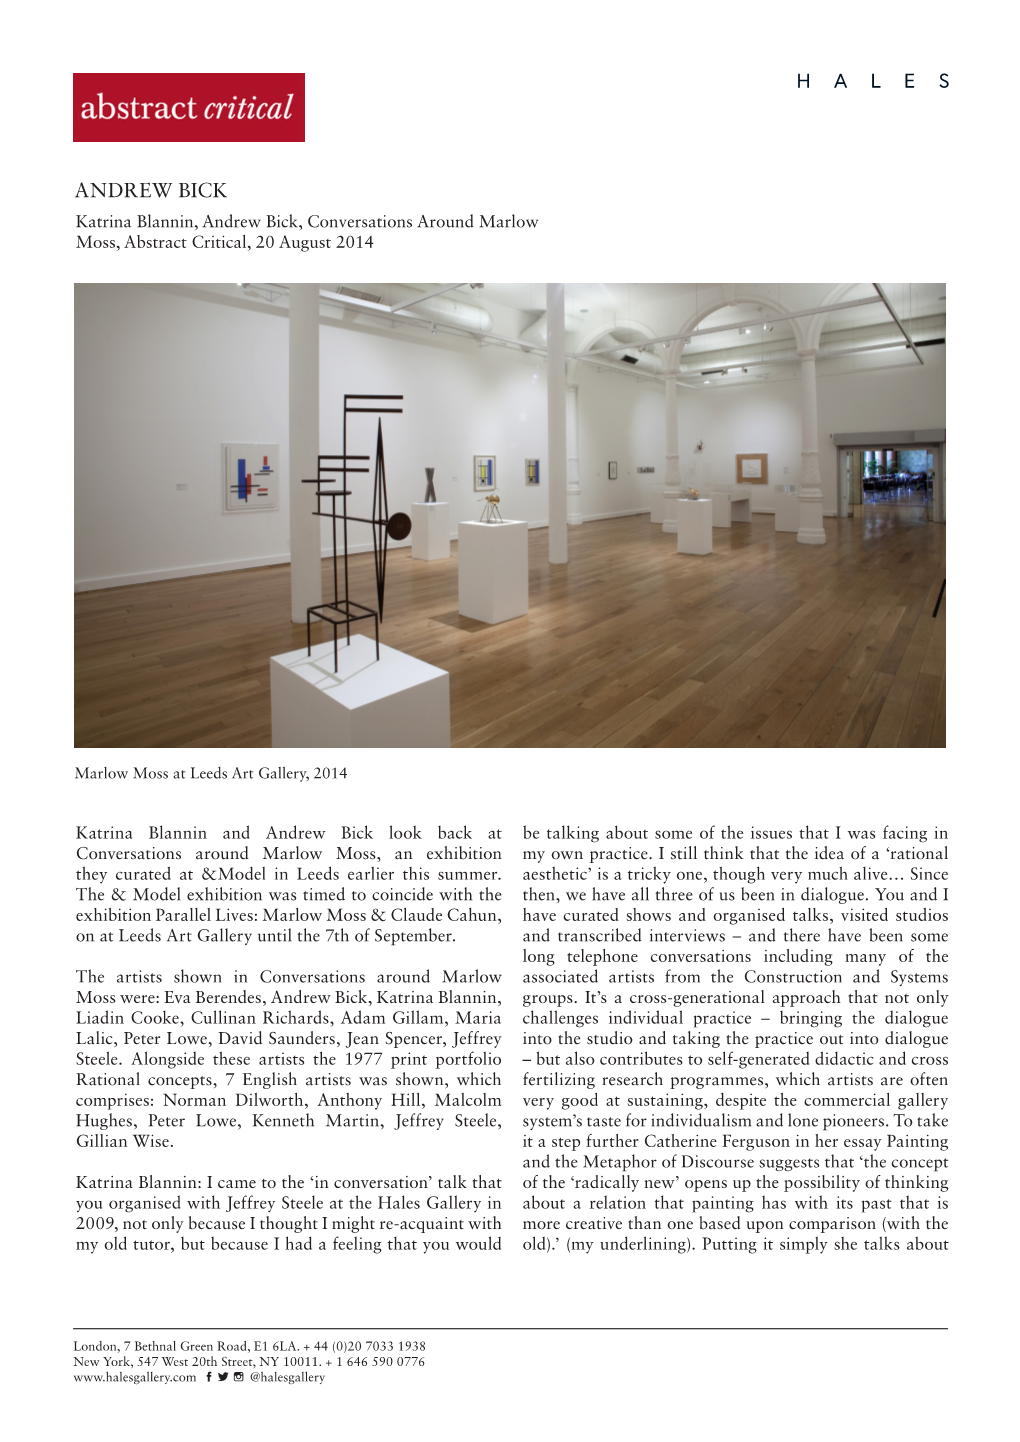 Katrina Blannin, Andrew Bick, Conversations Around Marlow Moss, Abstract Critical, 20 August 2014